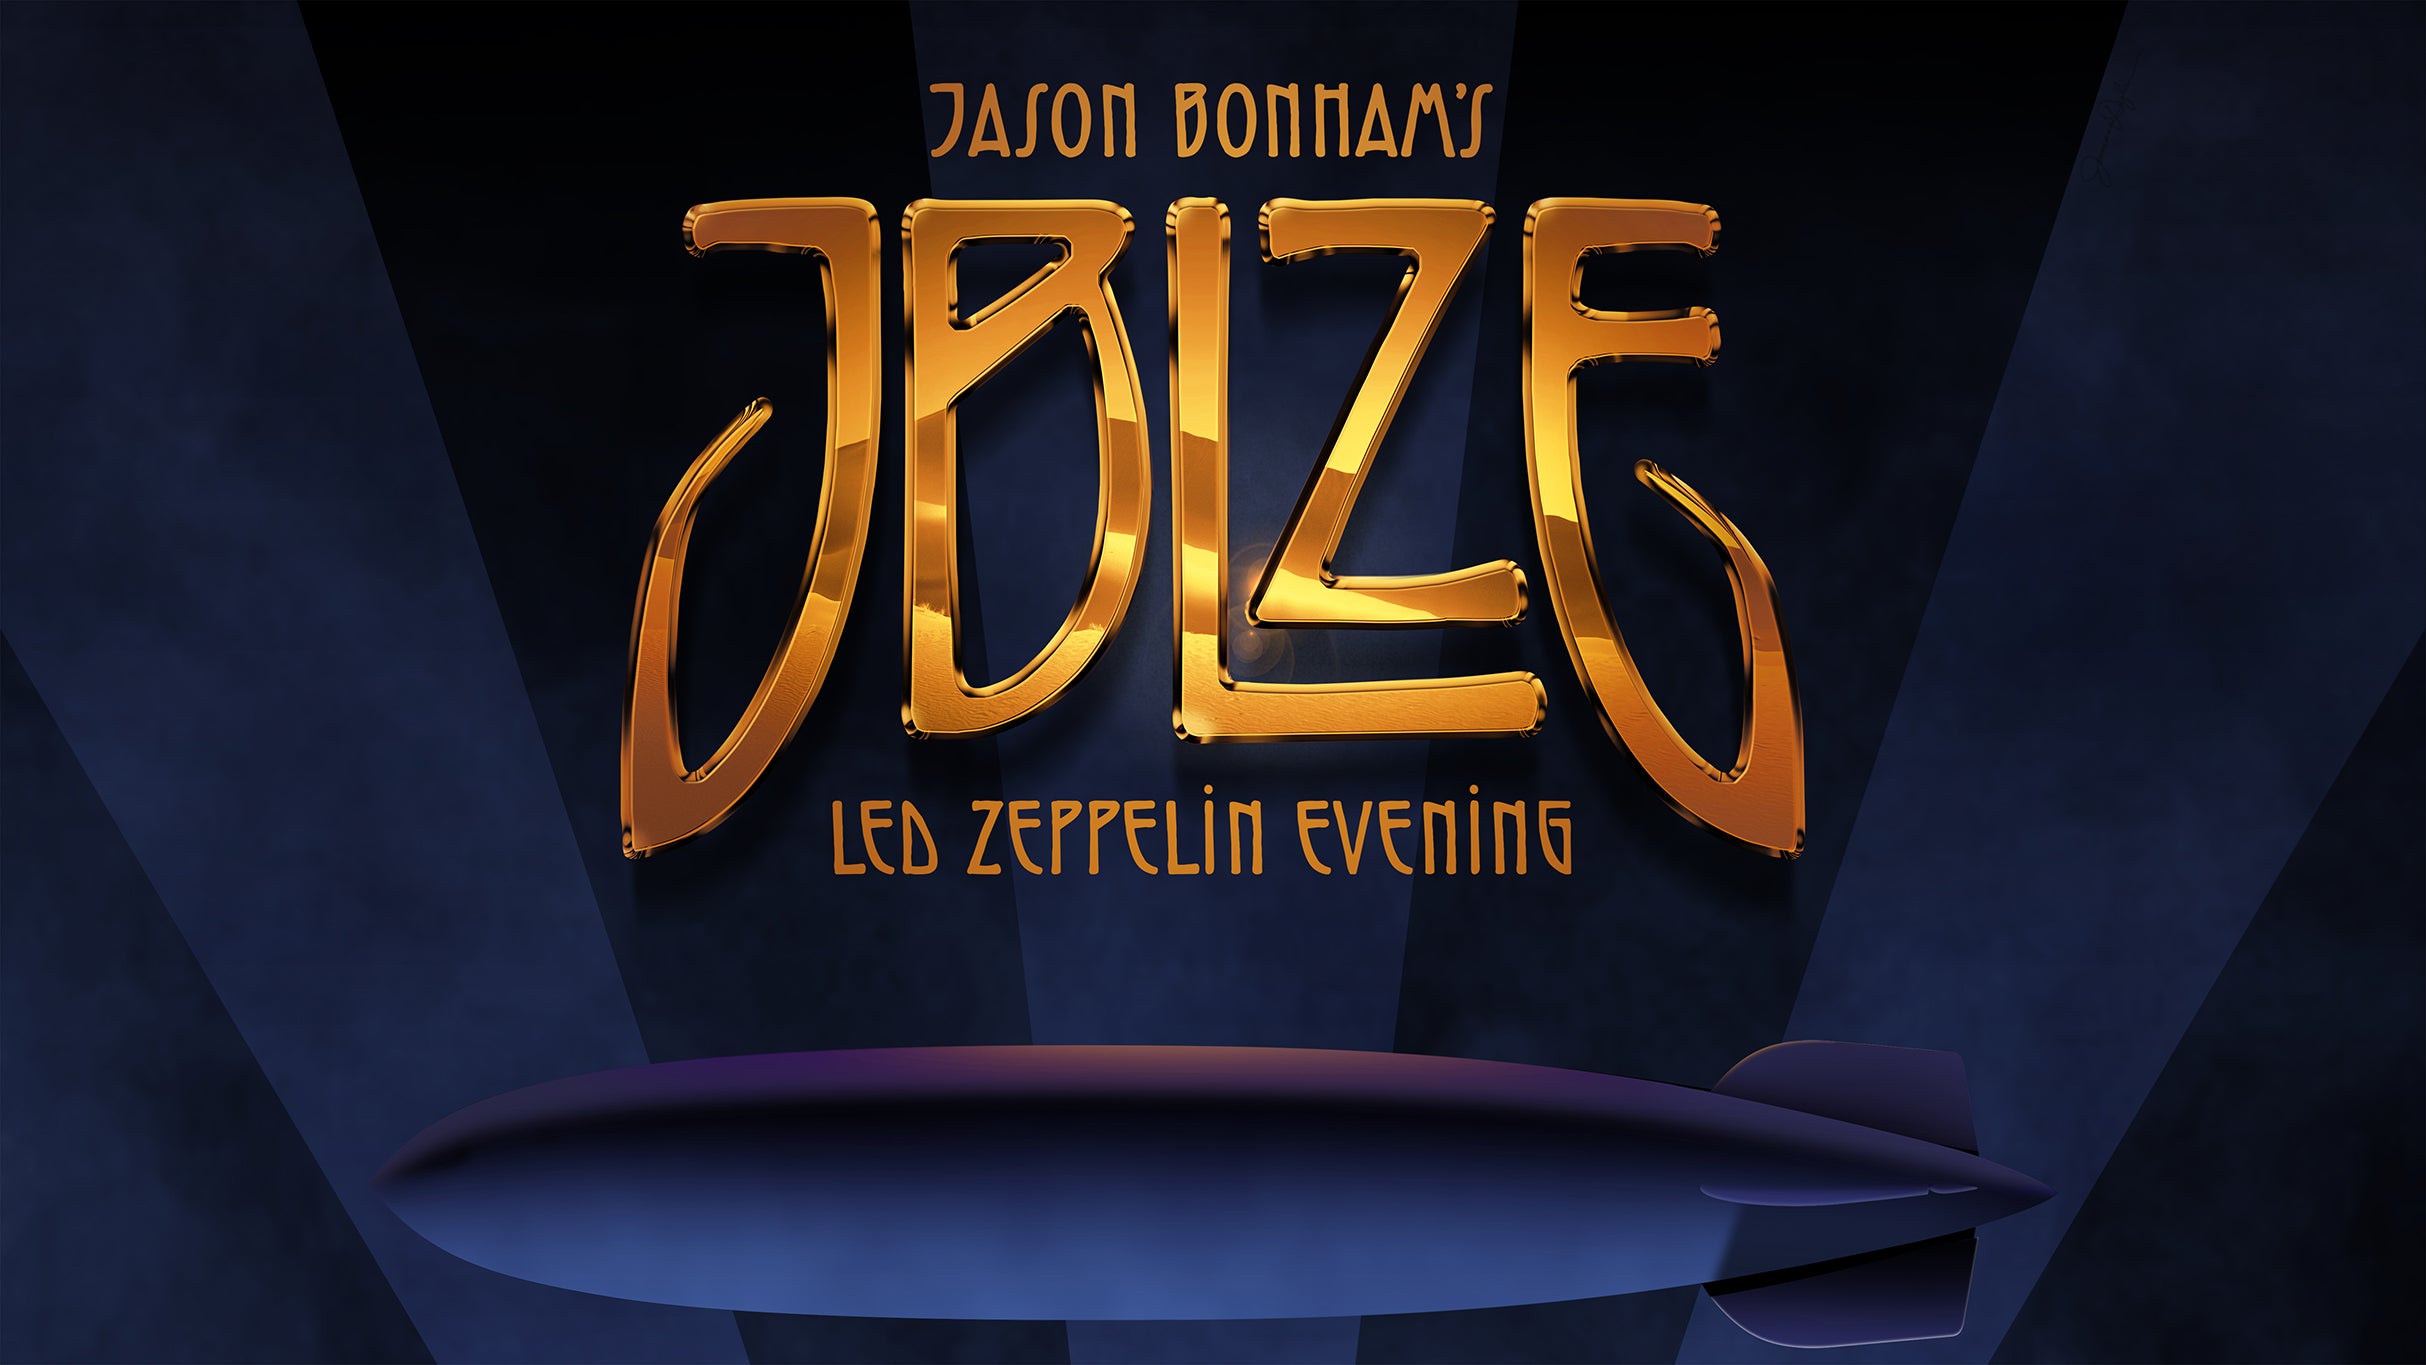 Jason Bonham's Led Zeppelin Evening presale password